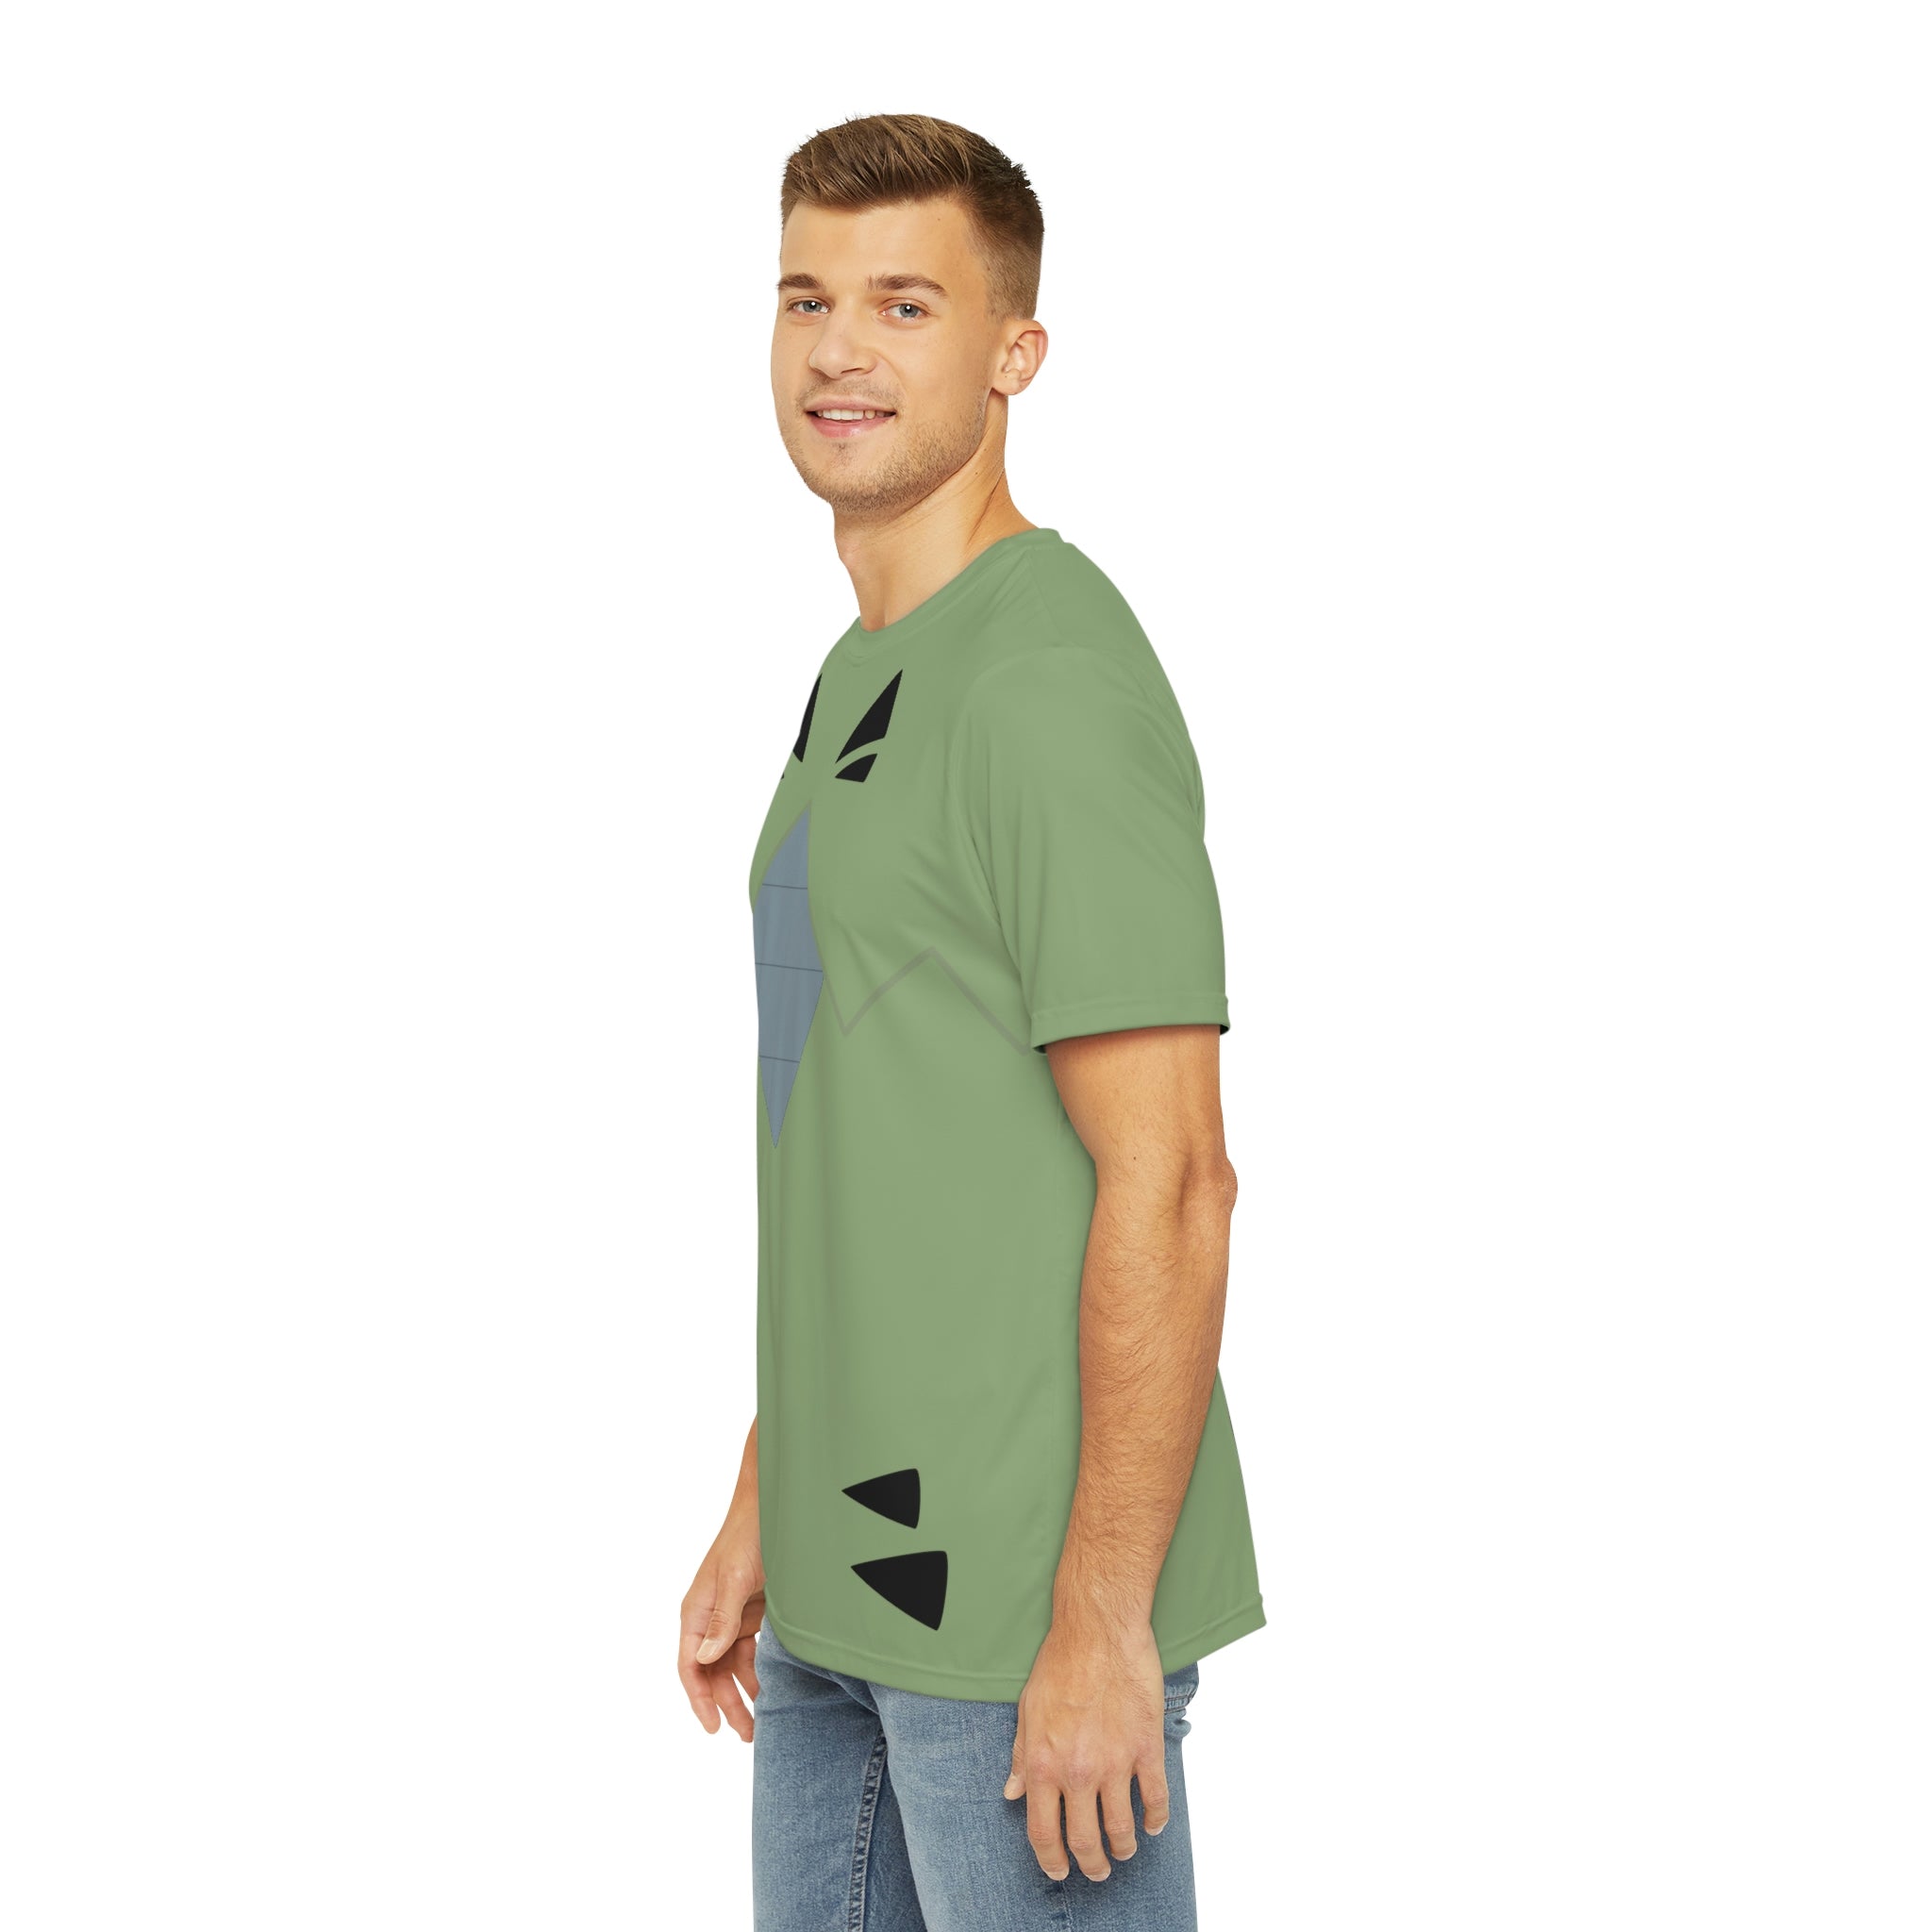 PKMN inspired Short Sleeve Shirt